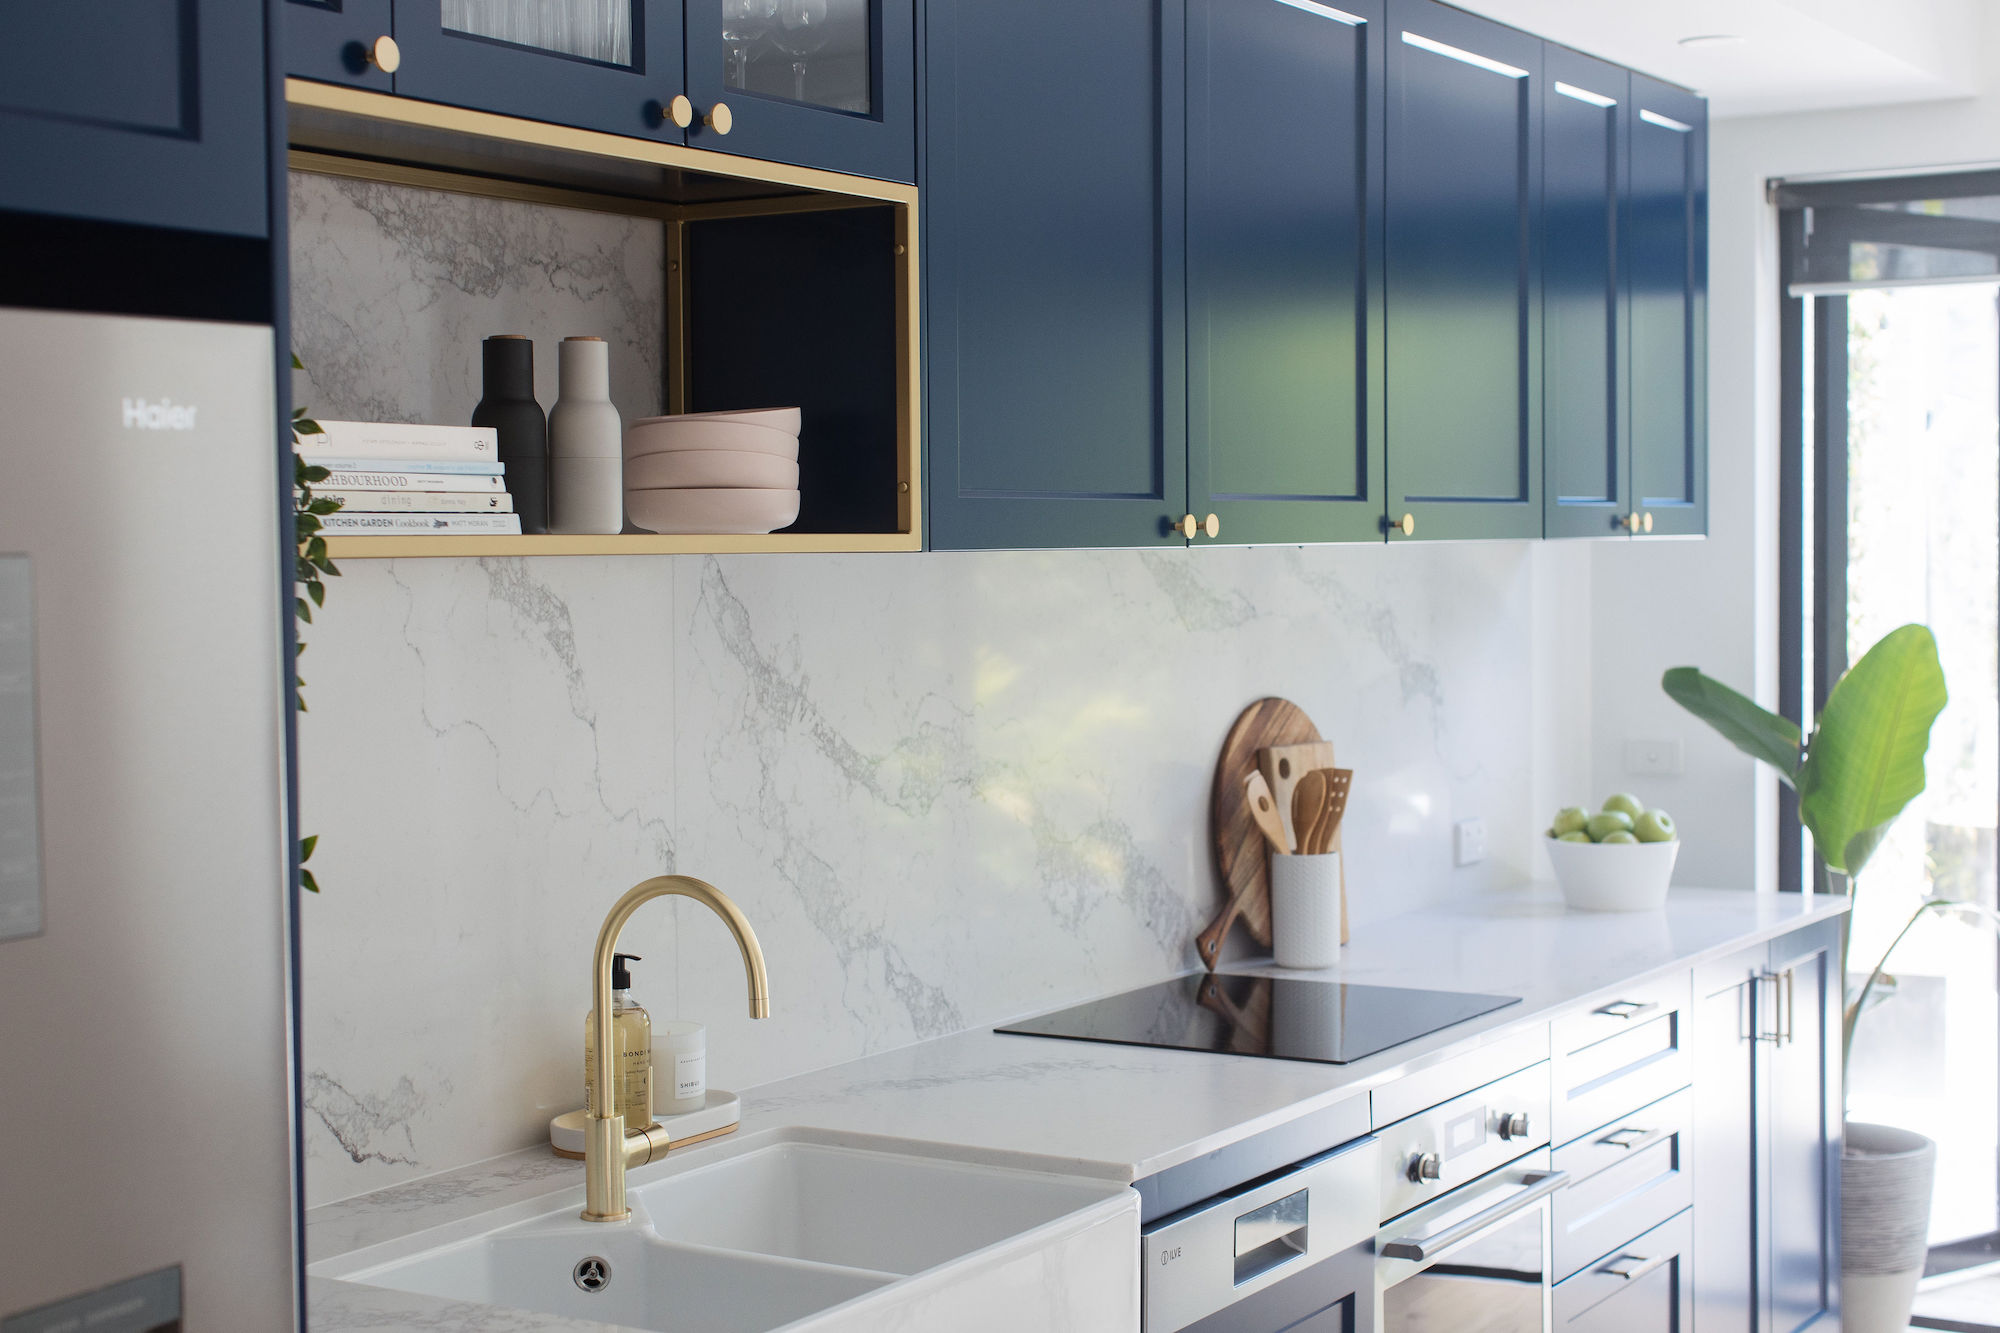 kitchen design in blue and white